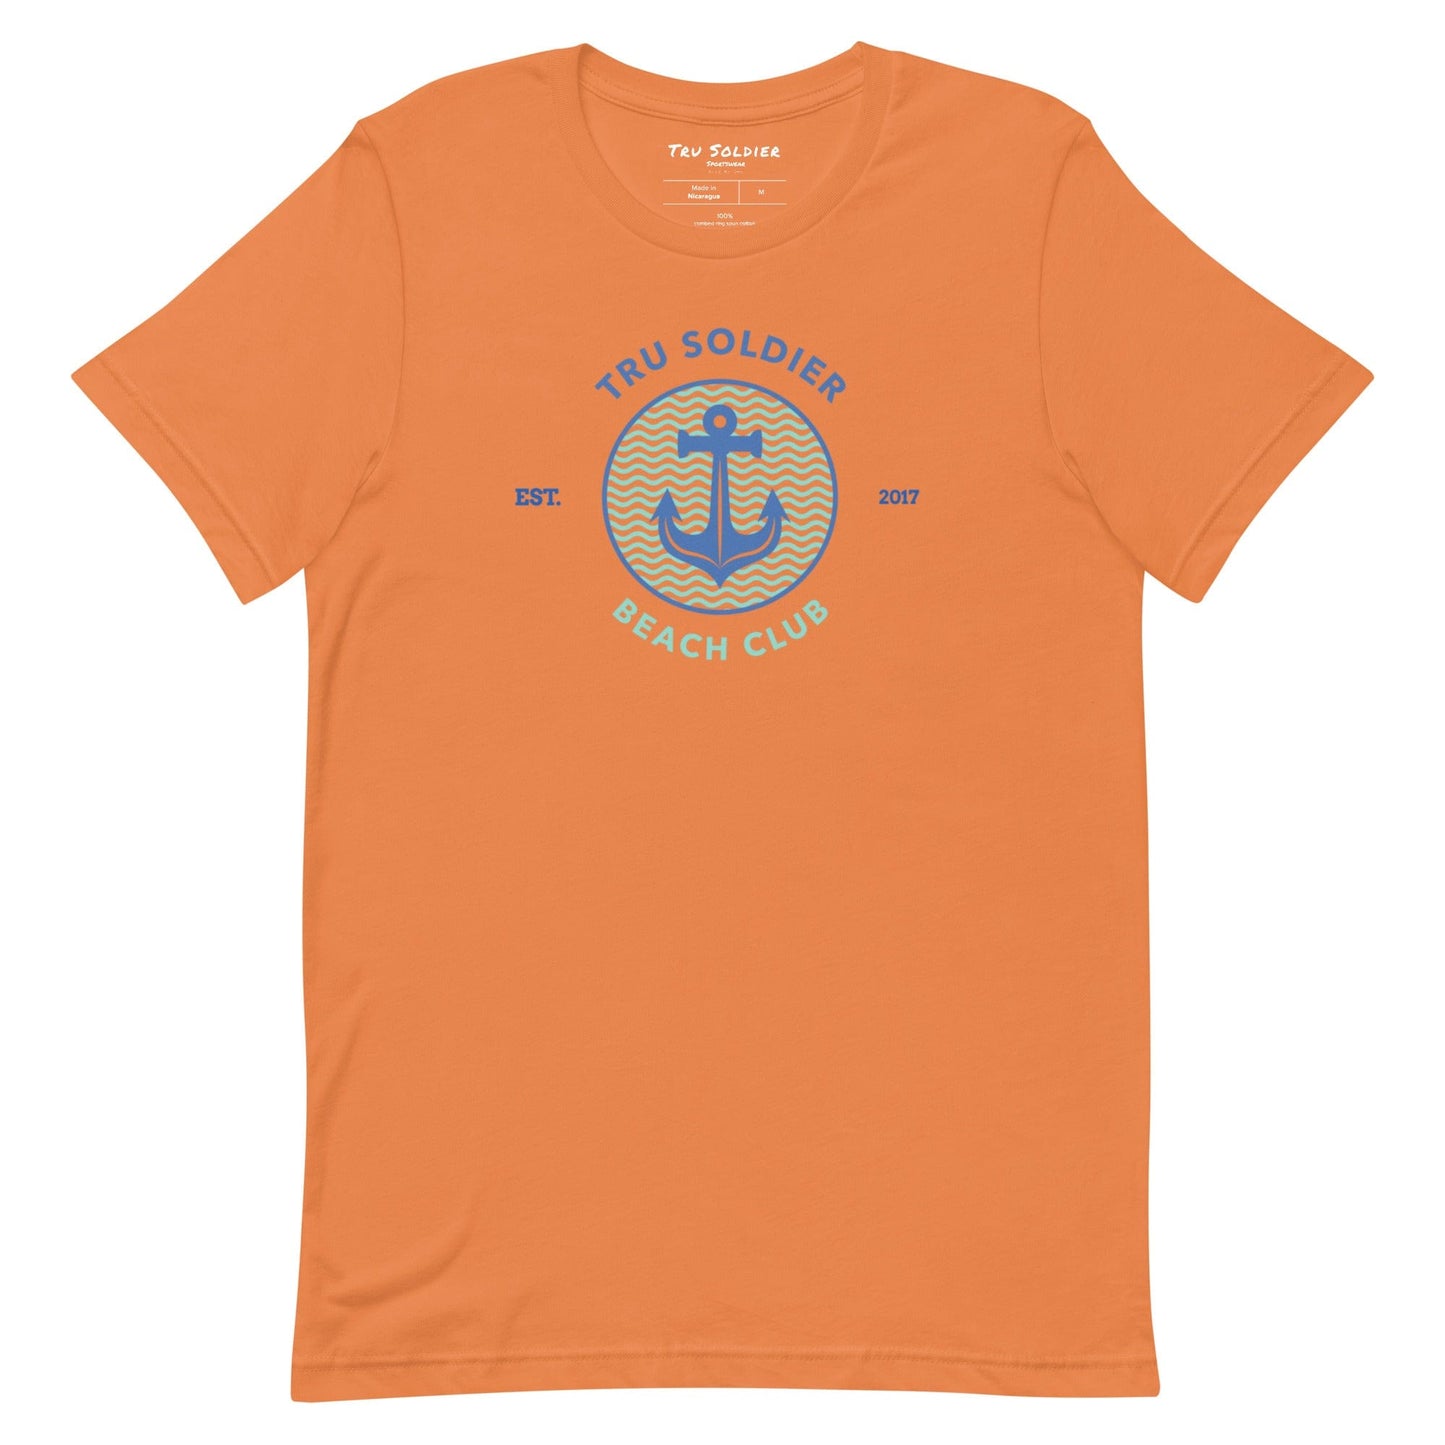 Tru Soldier Sportswear  Burnt Orange / XS Tru Soldier Beach Club t-shirt